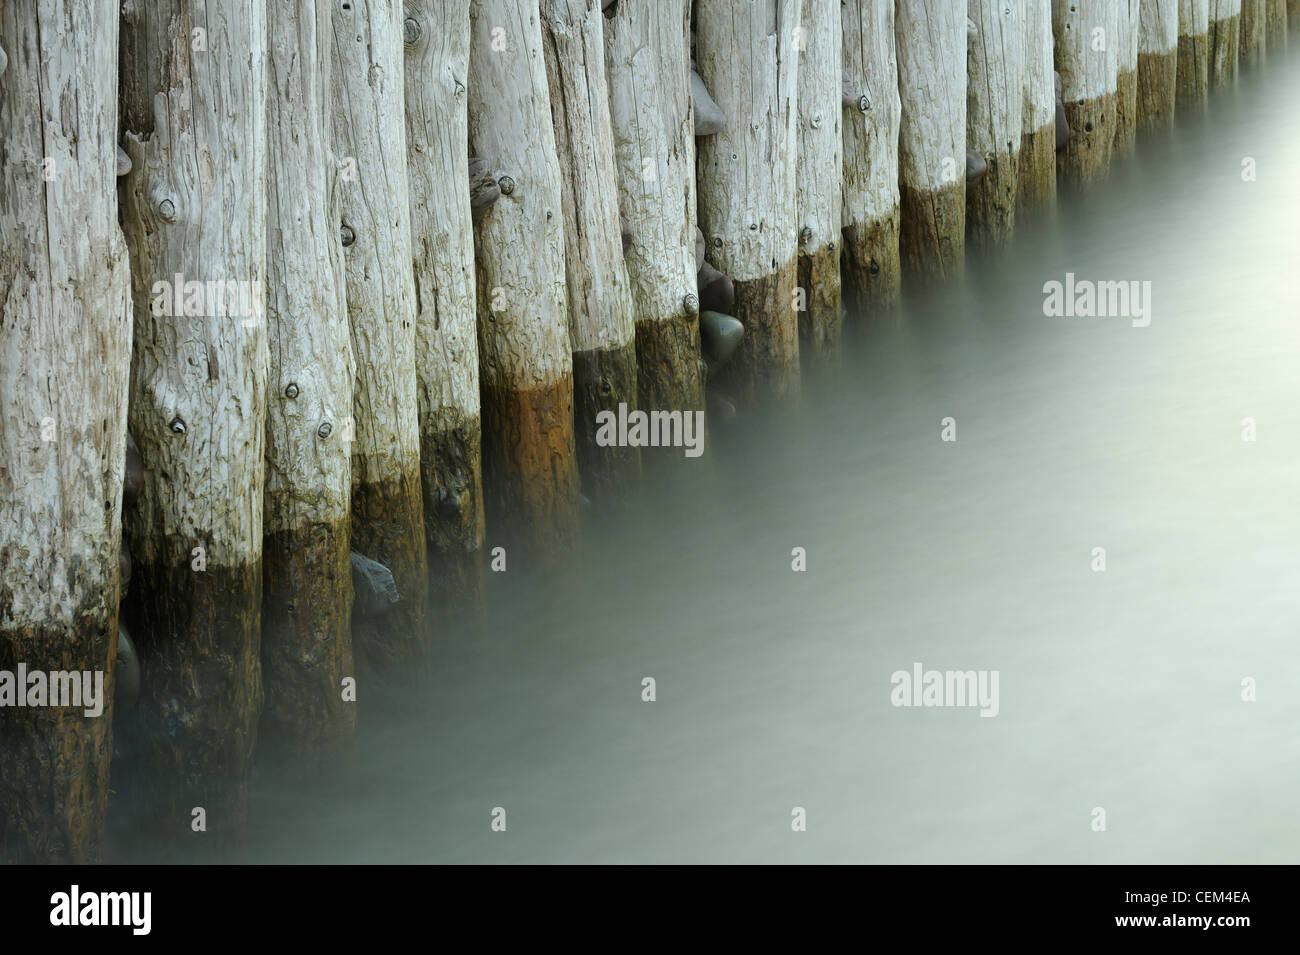 Wooden groynes and blurred water, Bossington beach, Somerset, UK Stock Photo